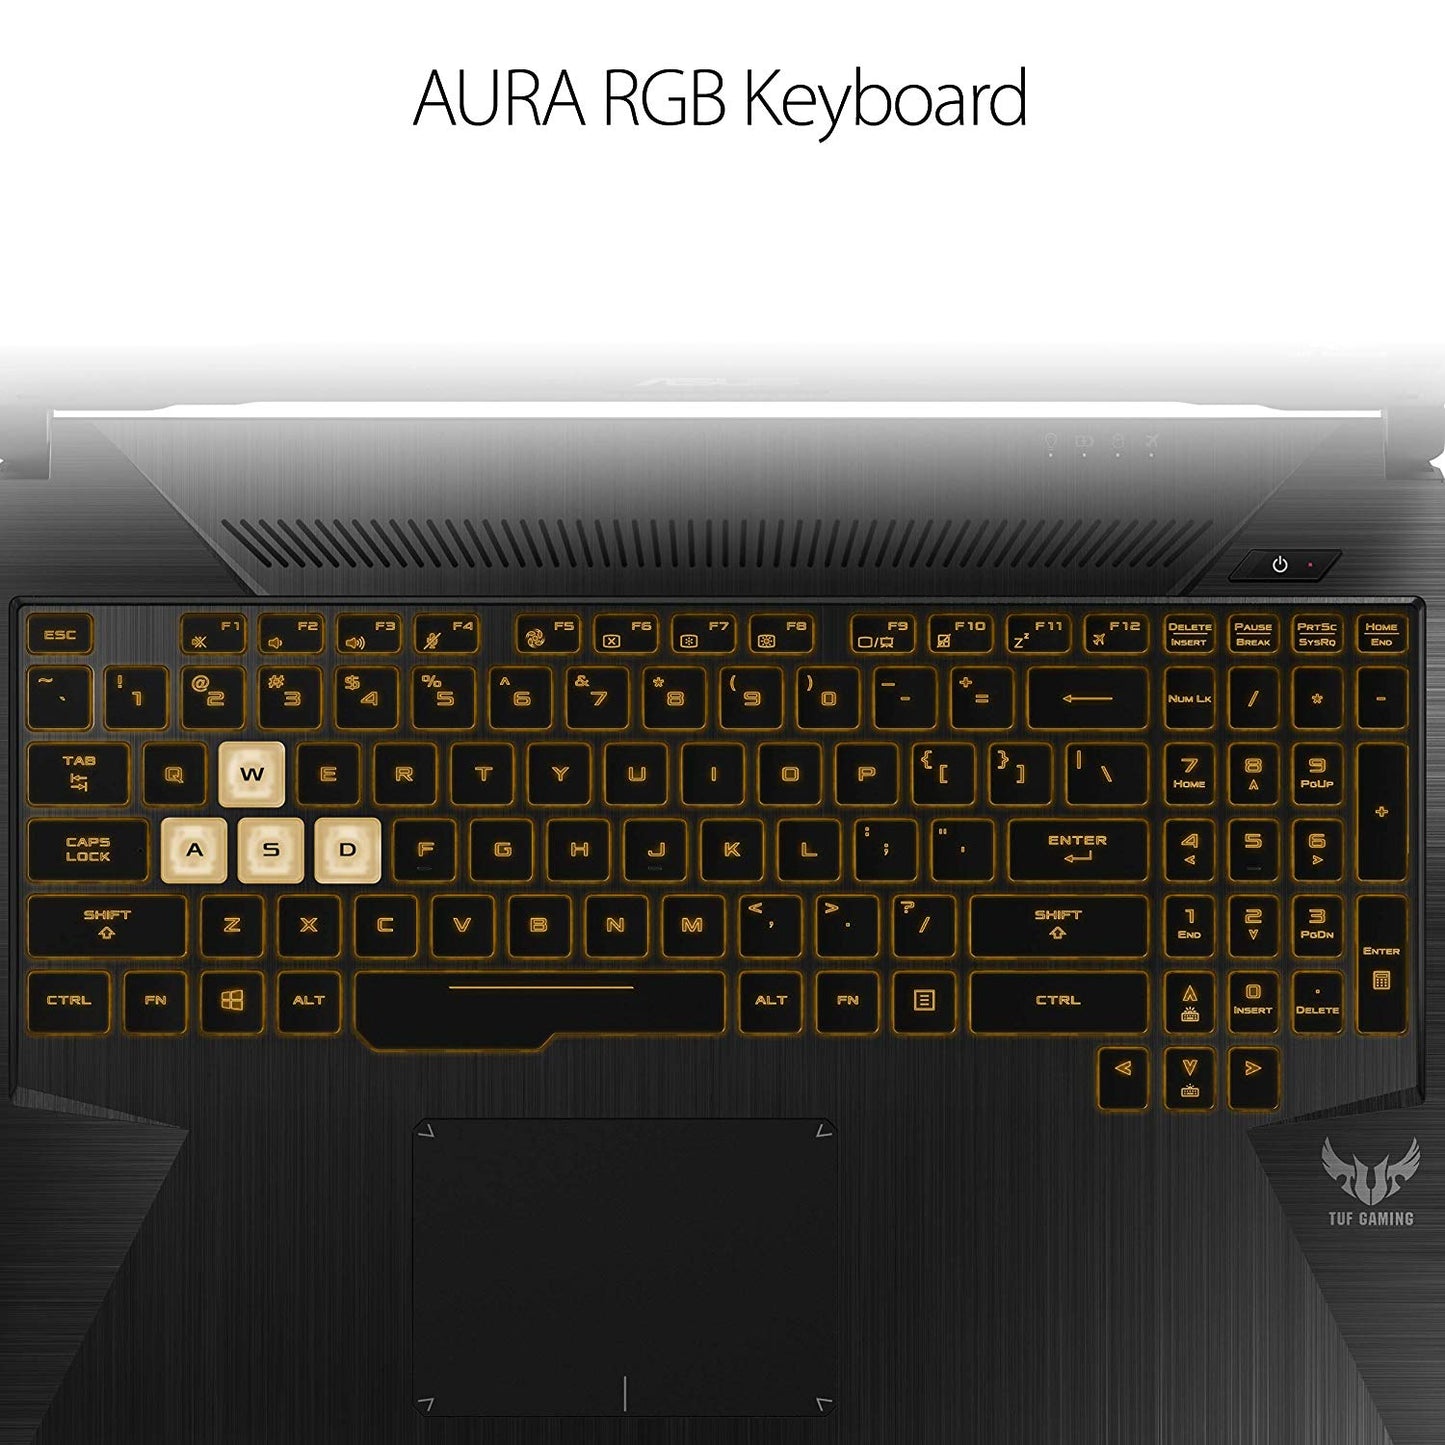 ASUS TUF (2019) Gaming Laptop, 15.6” 120Hz Full HD IPS-Type, AMD Ryzen 7 3750H, GeForce GTX 1660 Ti, 16GB DDR4, 256GB PCIe SSD + 1TB HDD, Gigabit WiFi 5, Windows 10 Home, TUF505DU-EB74